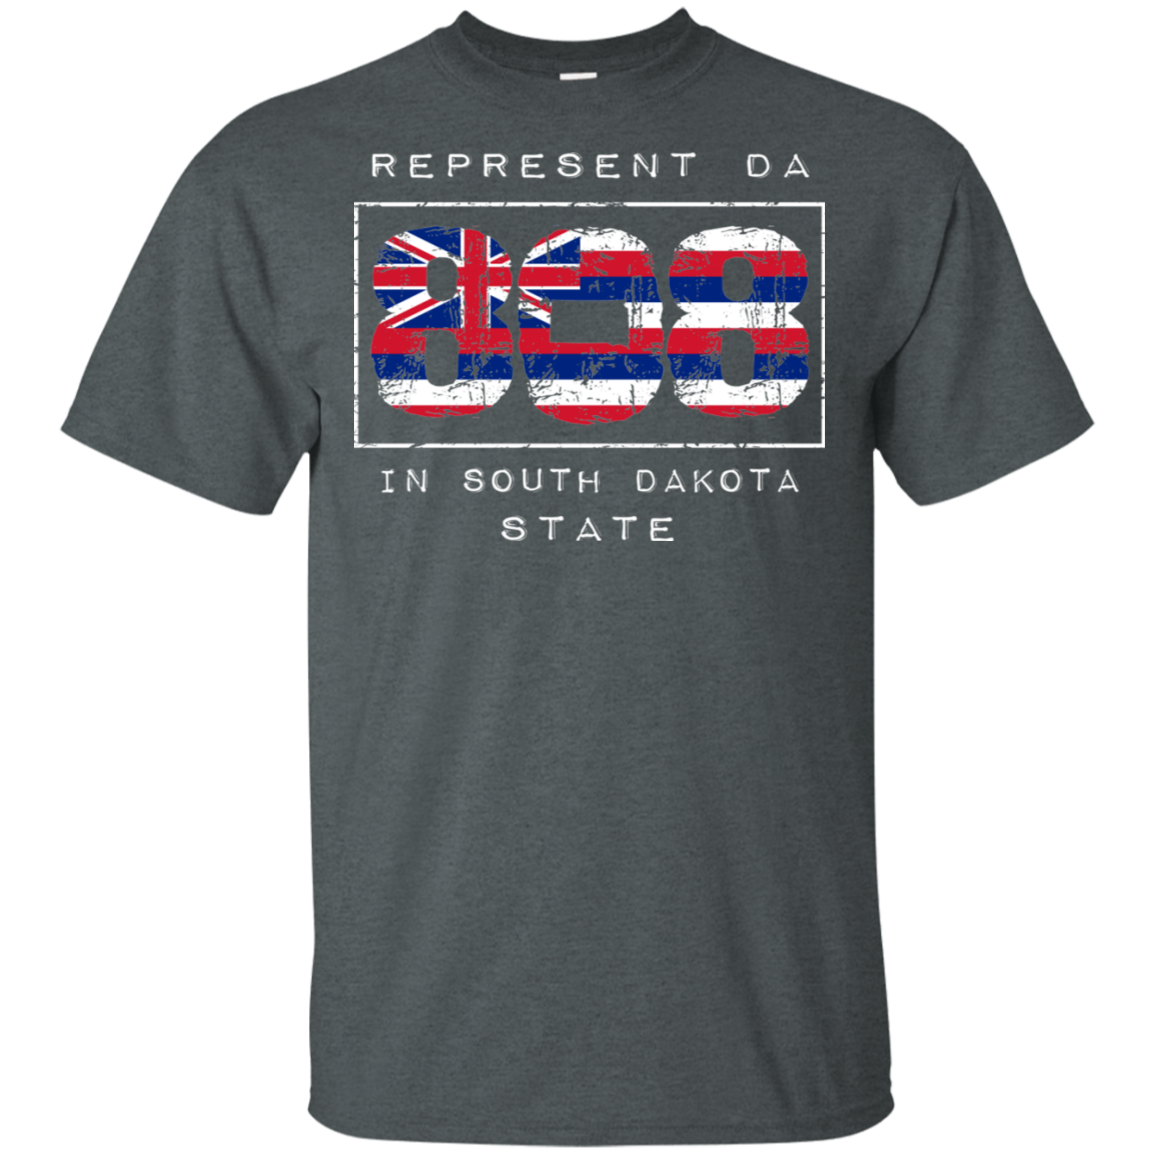 Rep Da 808 In South Dakota State Ultra Cotton T-Shirt, T-Shirts, Hawaii Nei All Day